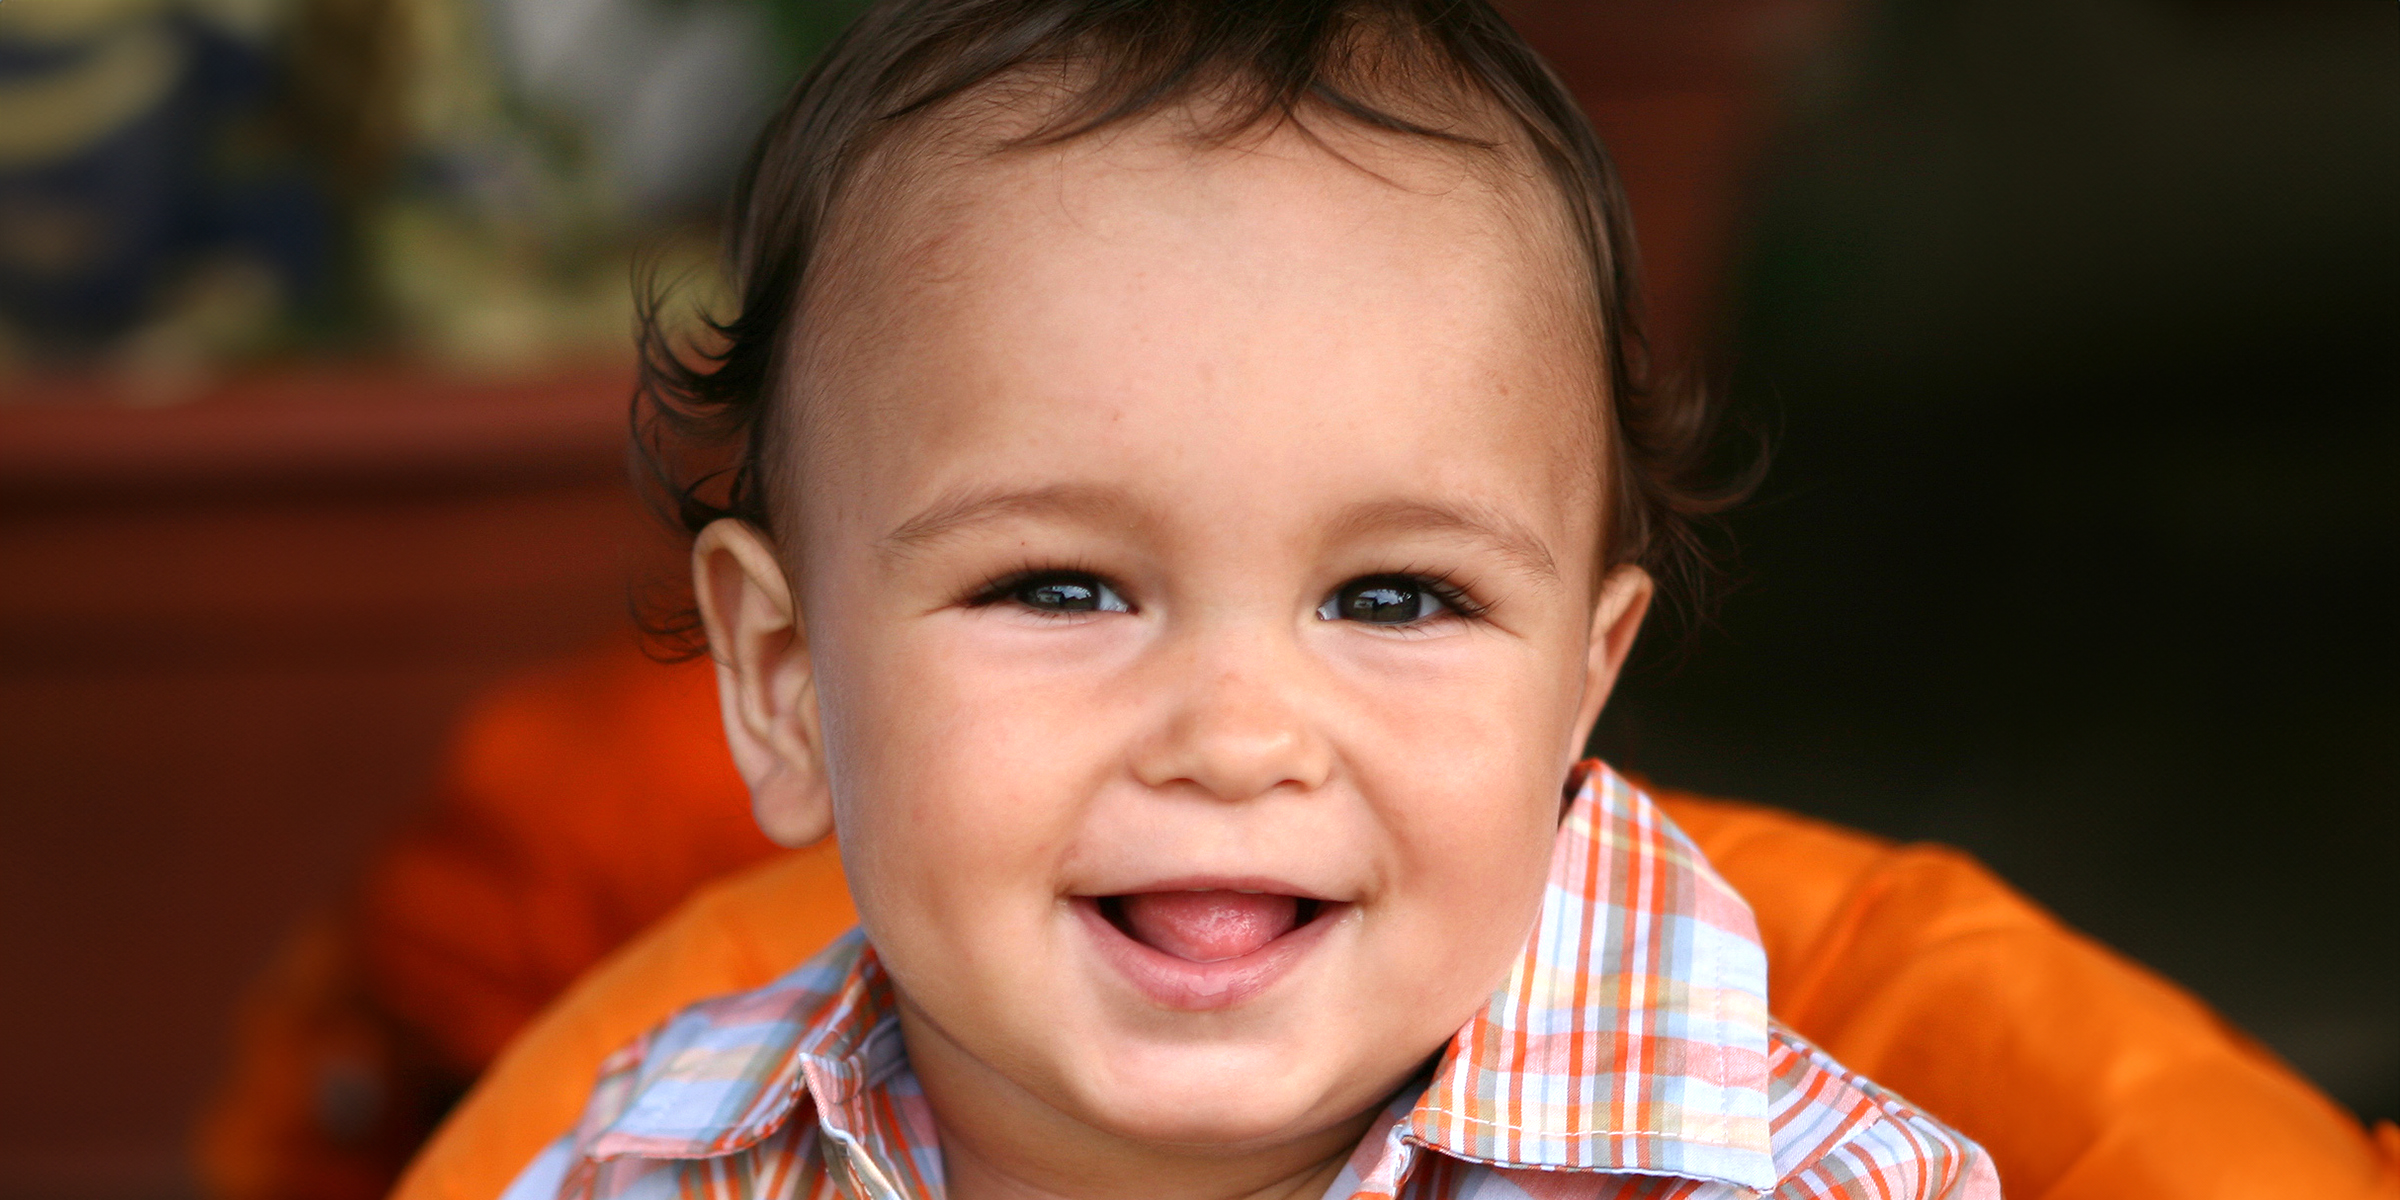 A dark-haired toddler | Source: Shutterstock